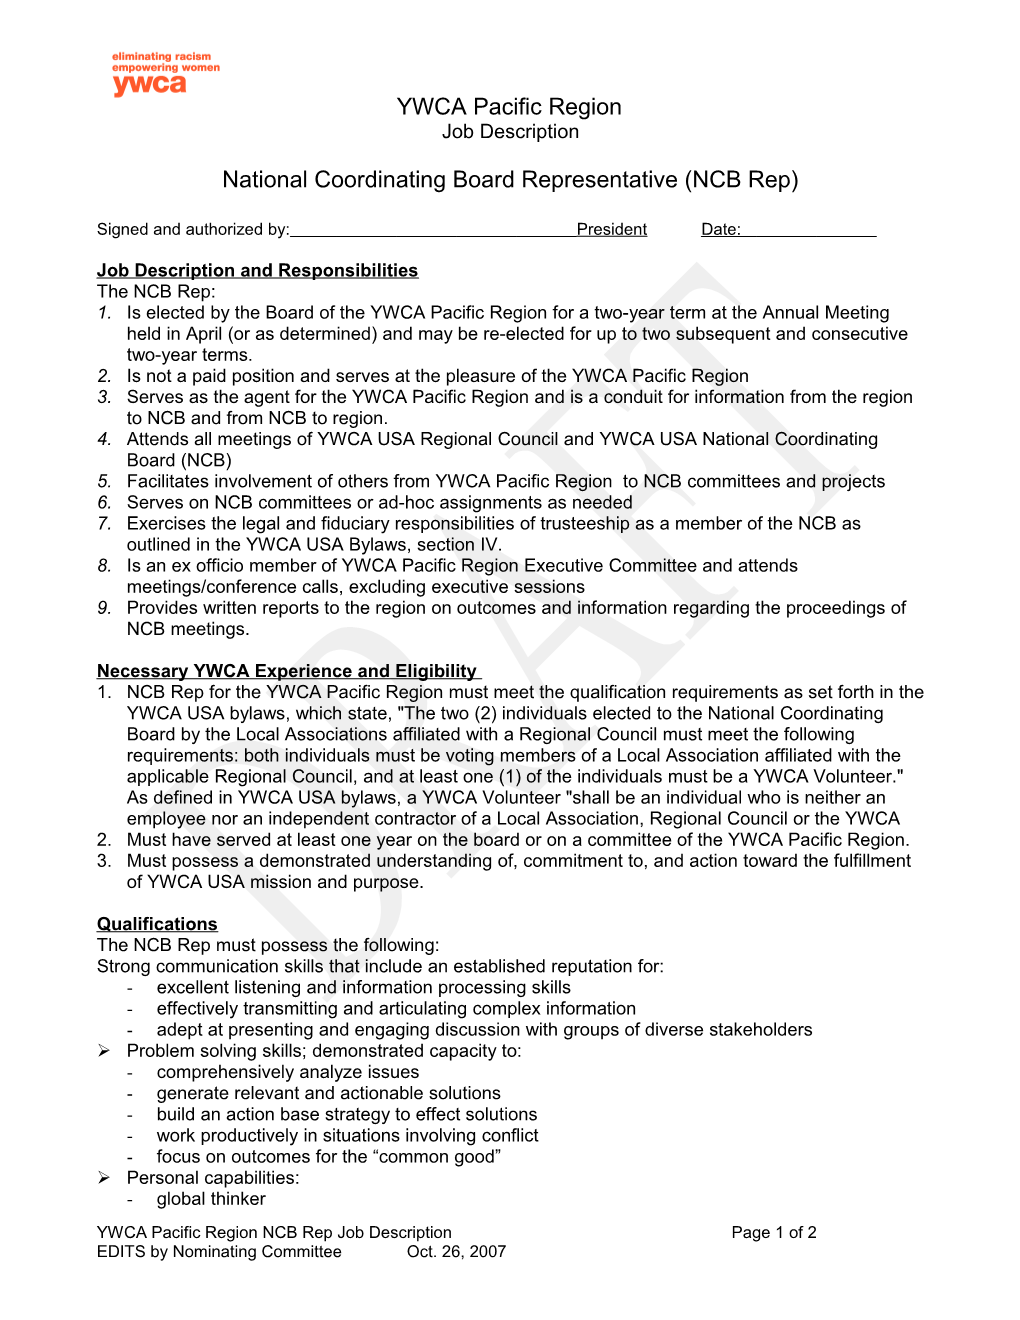 National Coordinating Board Representative